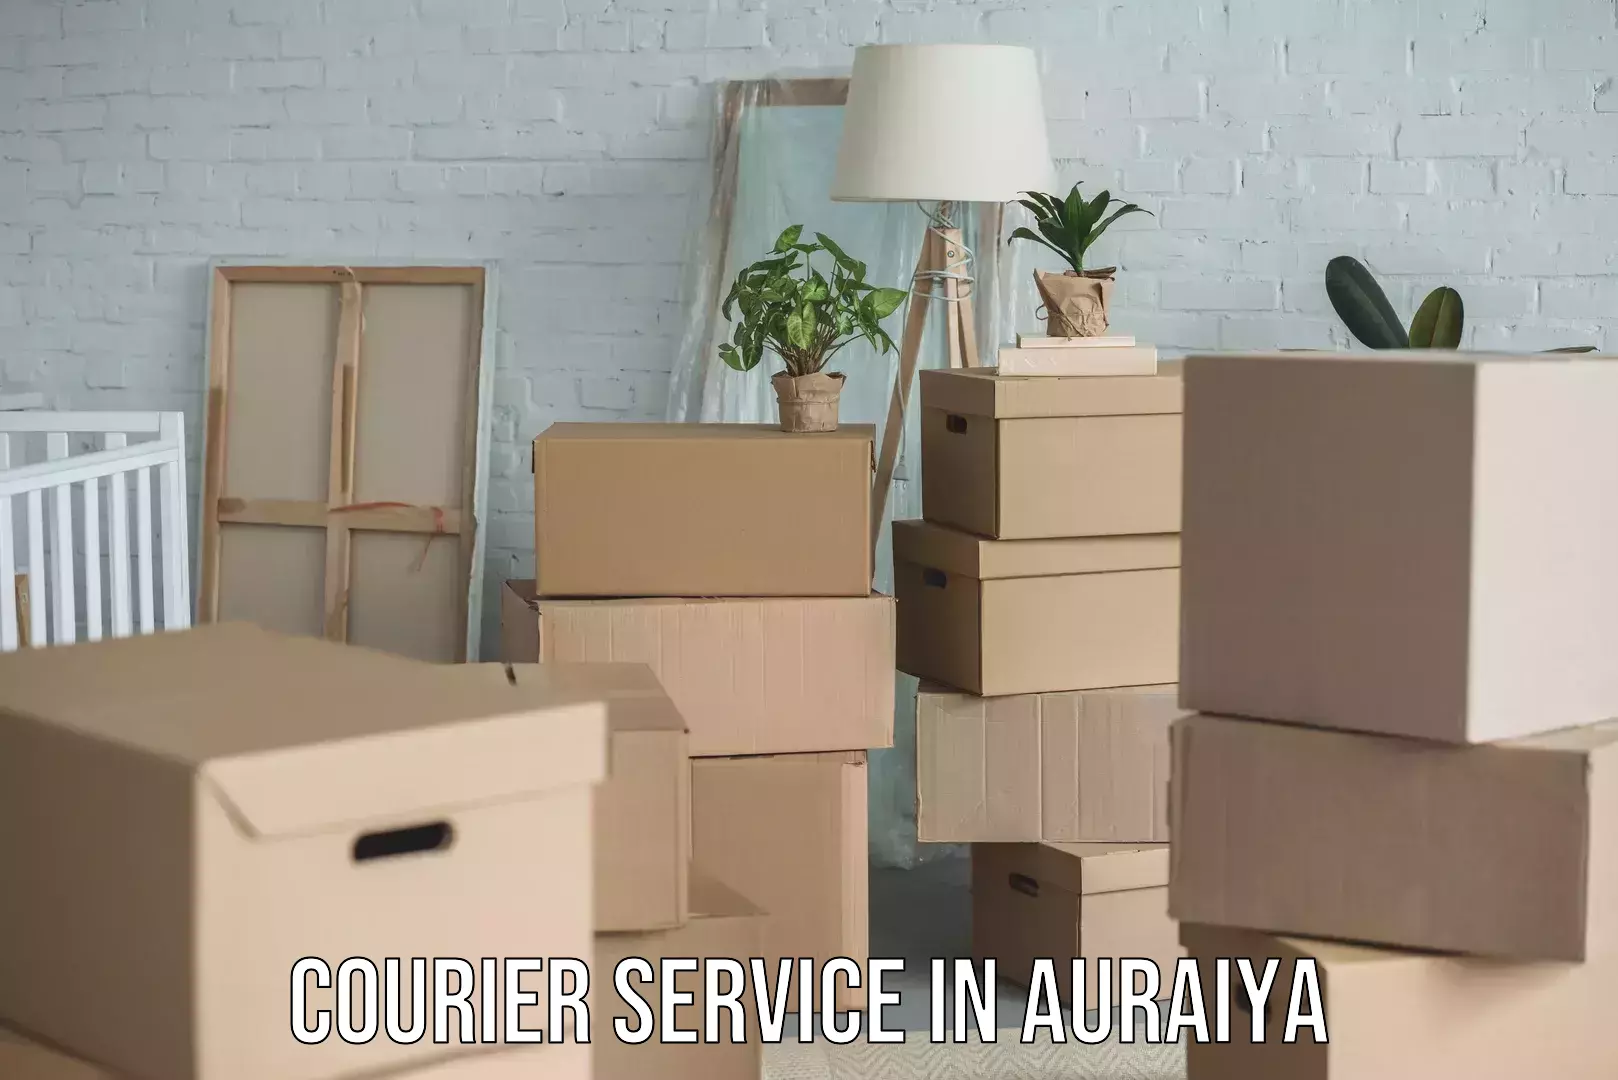 Doorstep delivery service in Auraiya